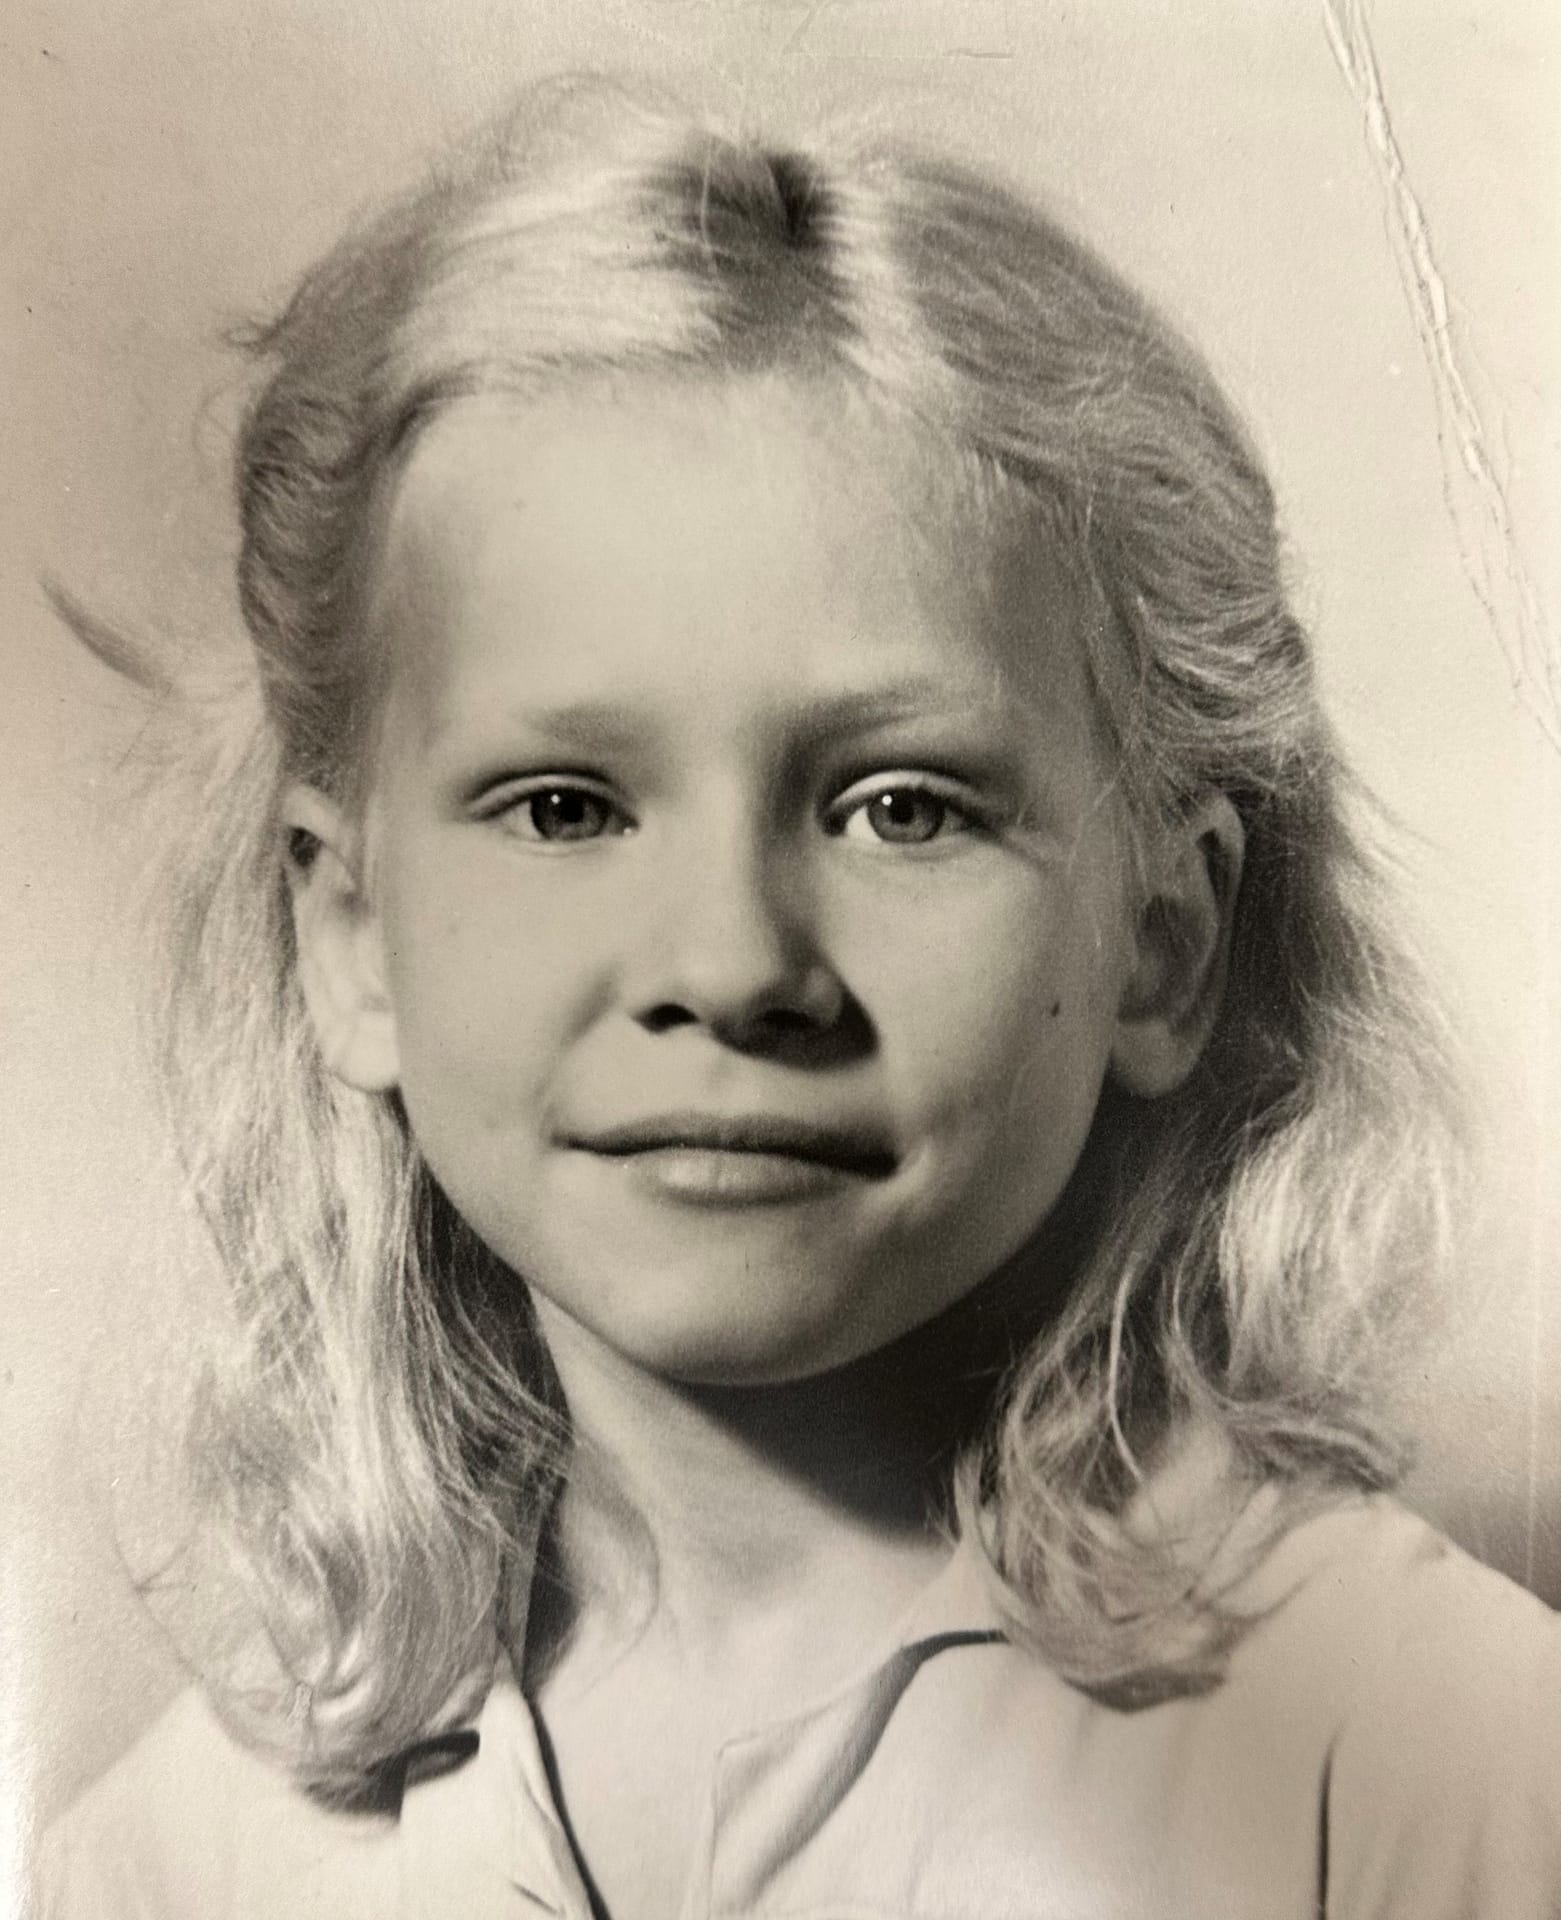 Rosemarie Abbott as a child